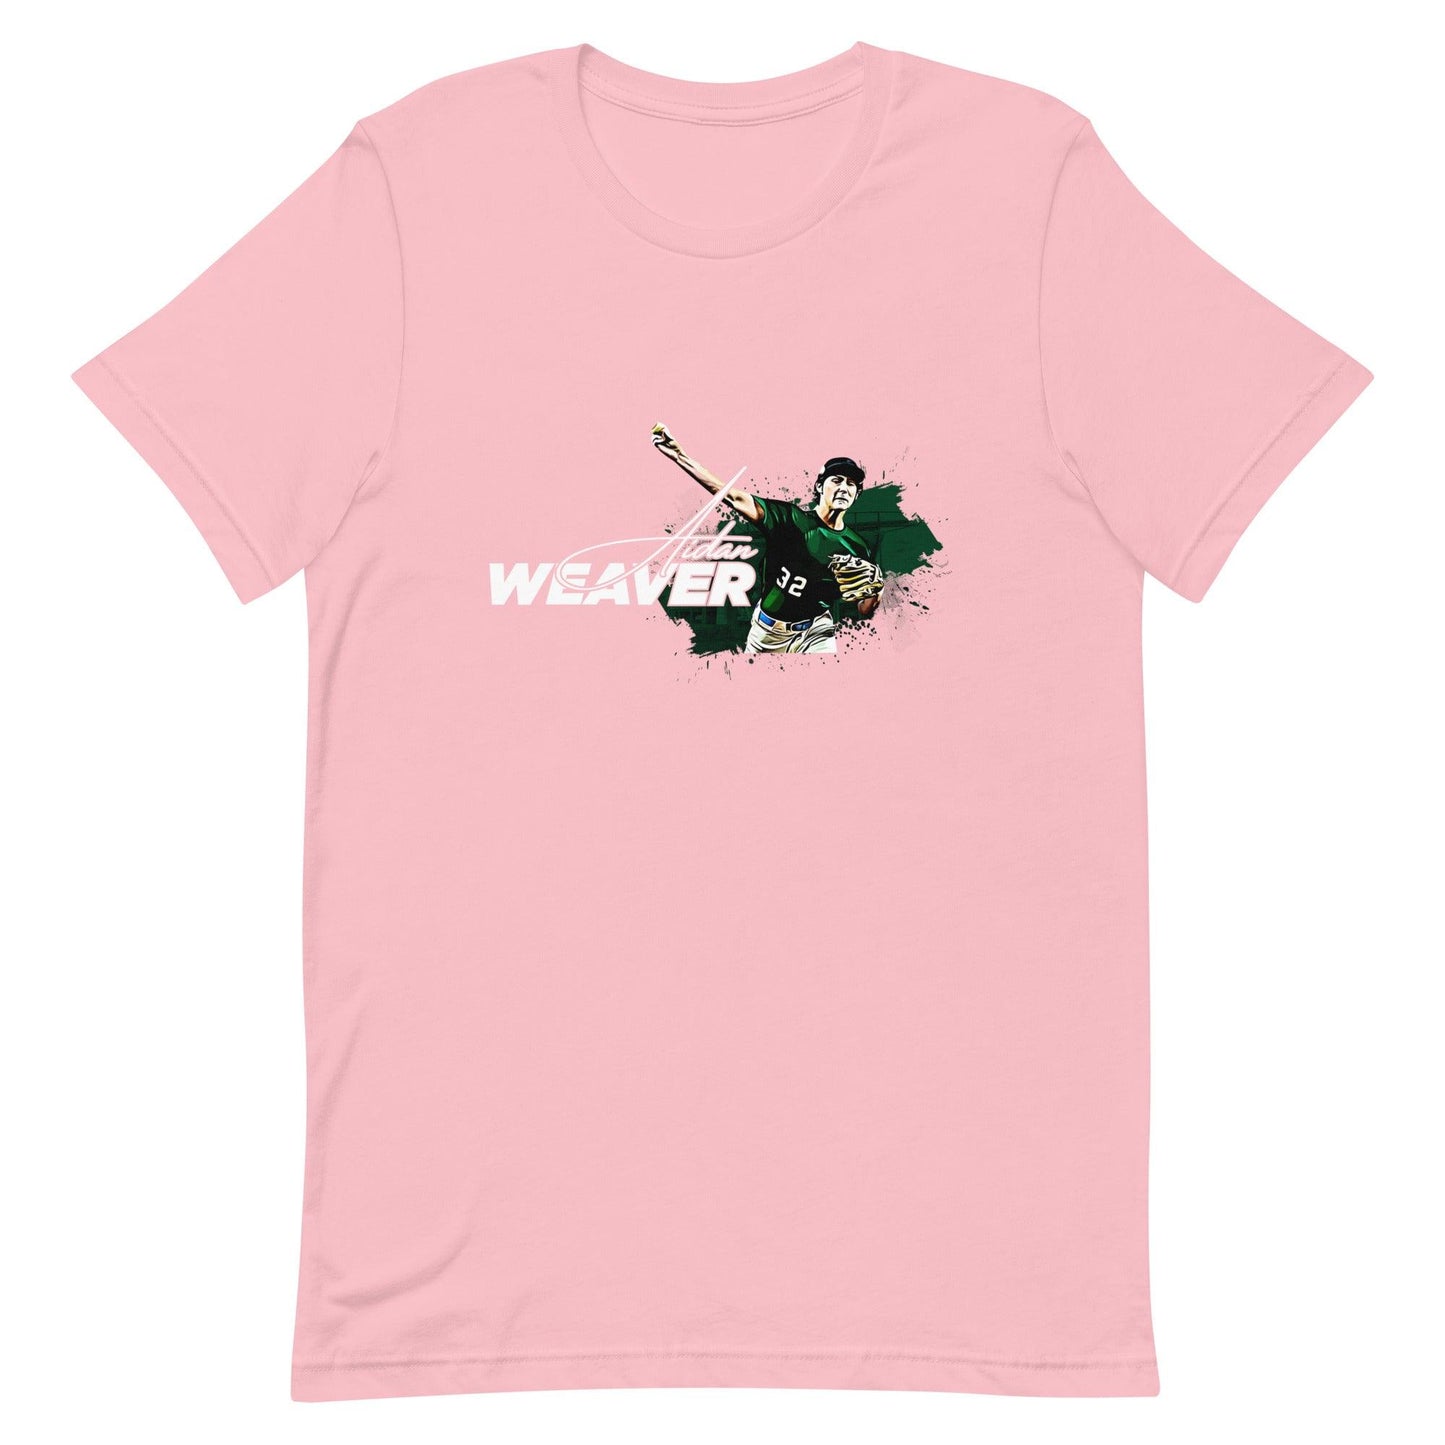 Aidan Weaver “Essential” t-shirt - Fan Arch